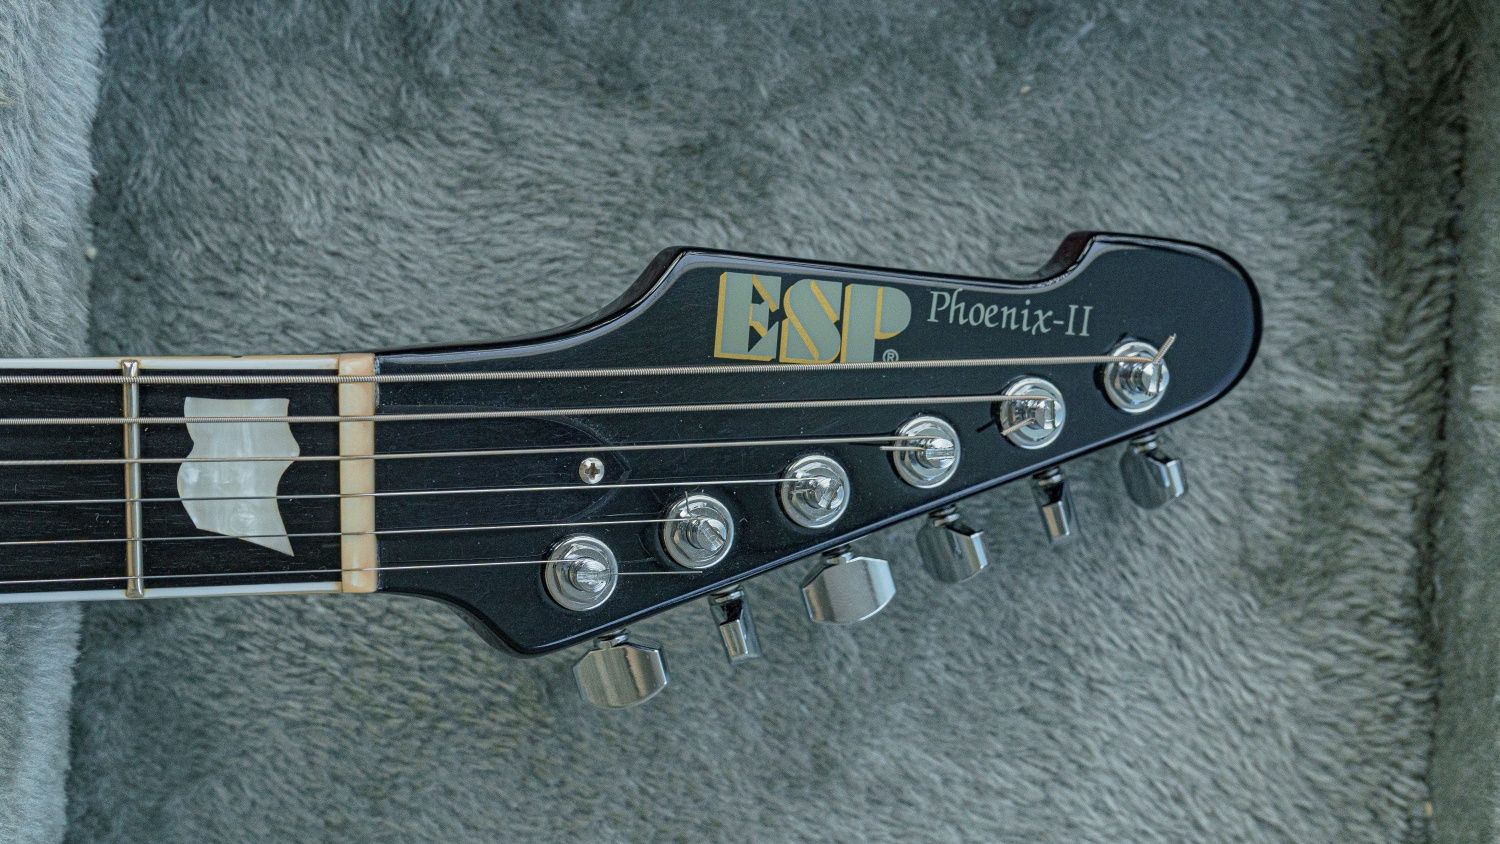 ESP Phoenix II (a'la Firebird) 2011